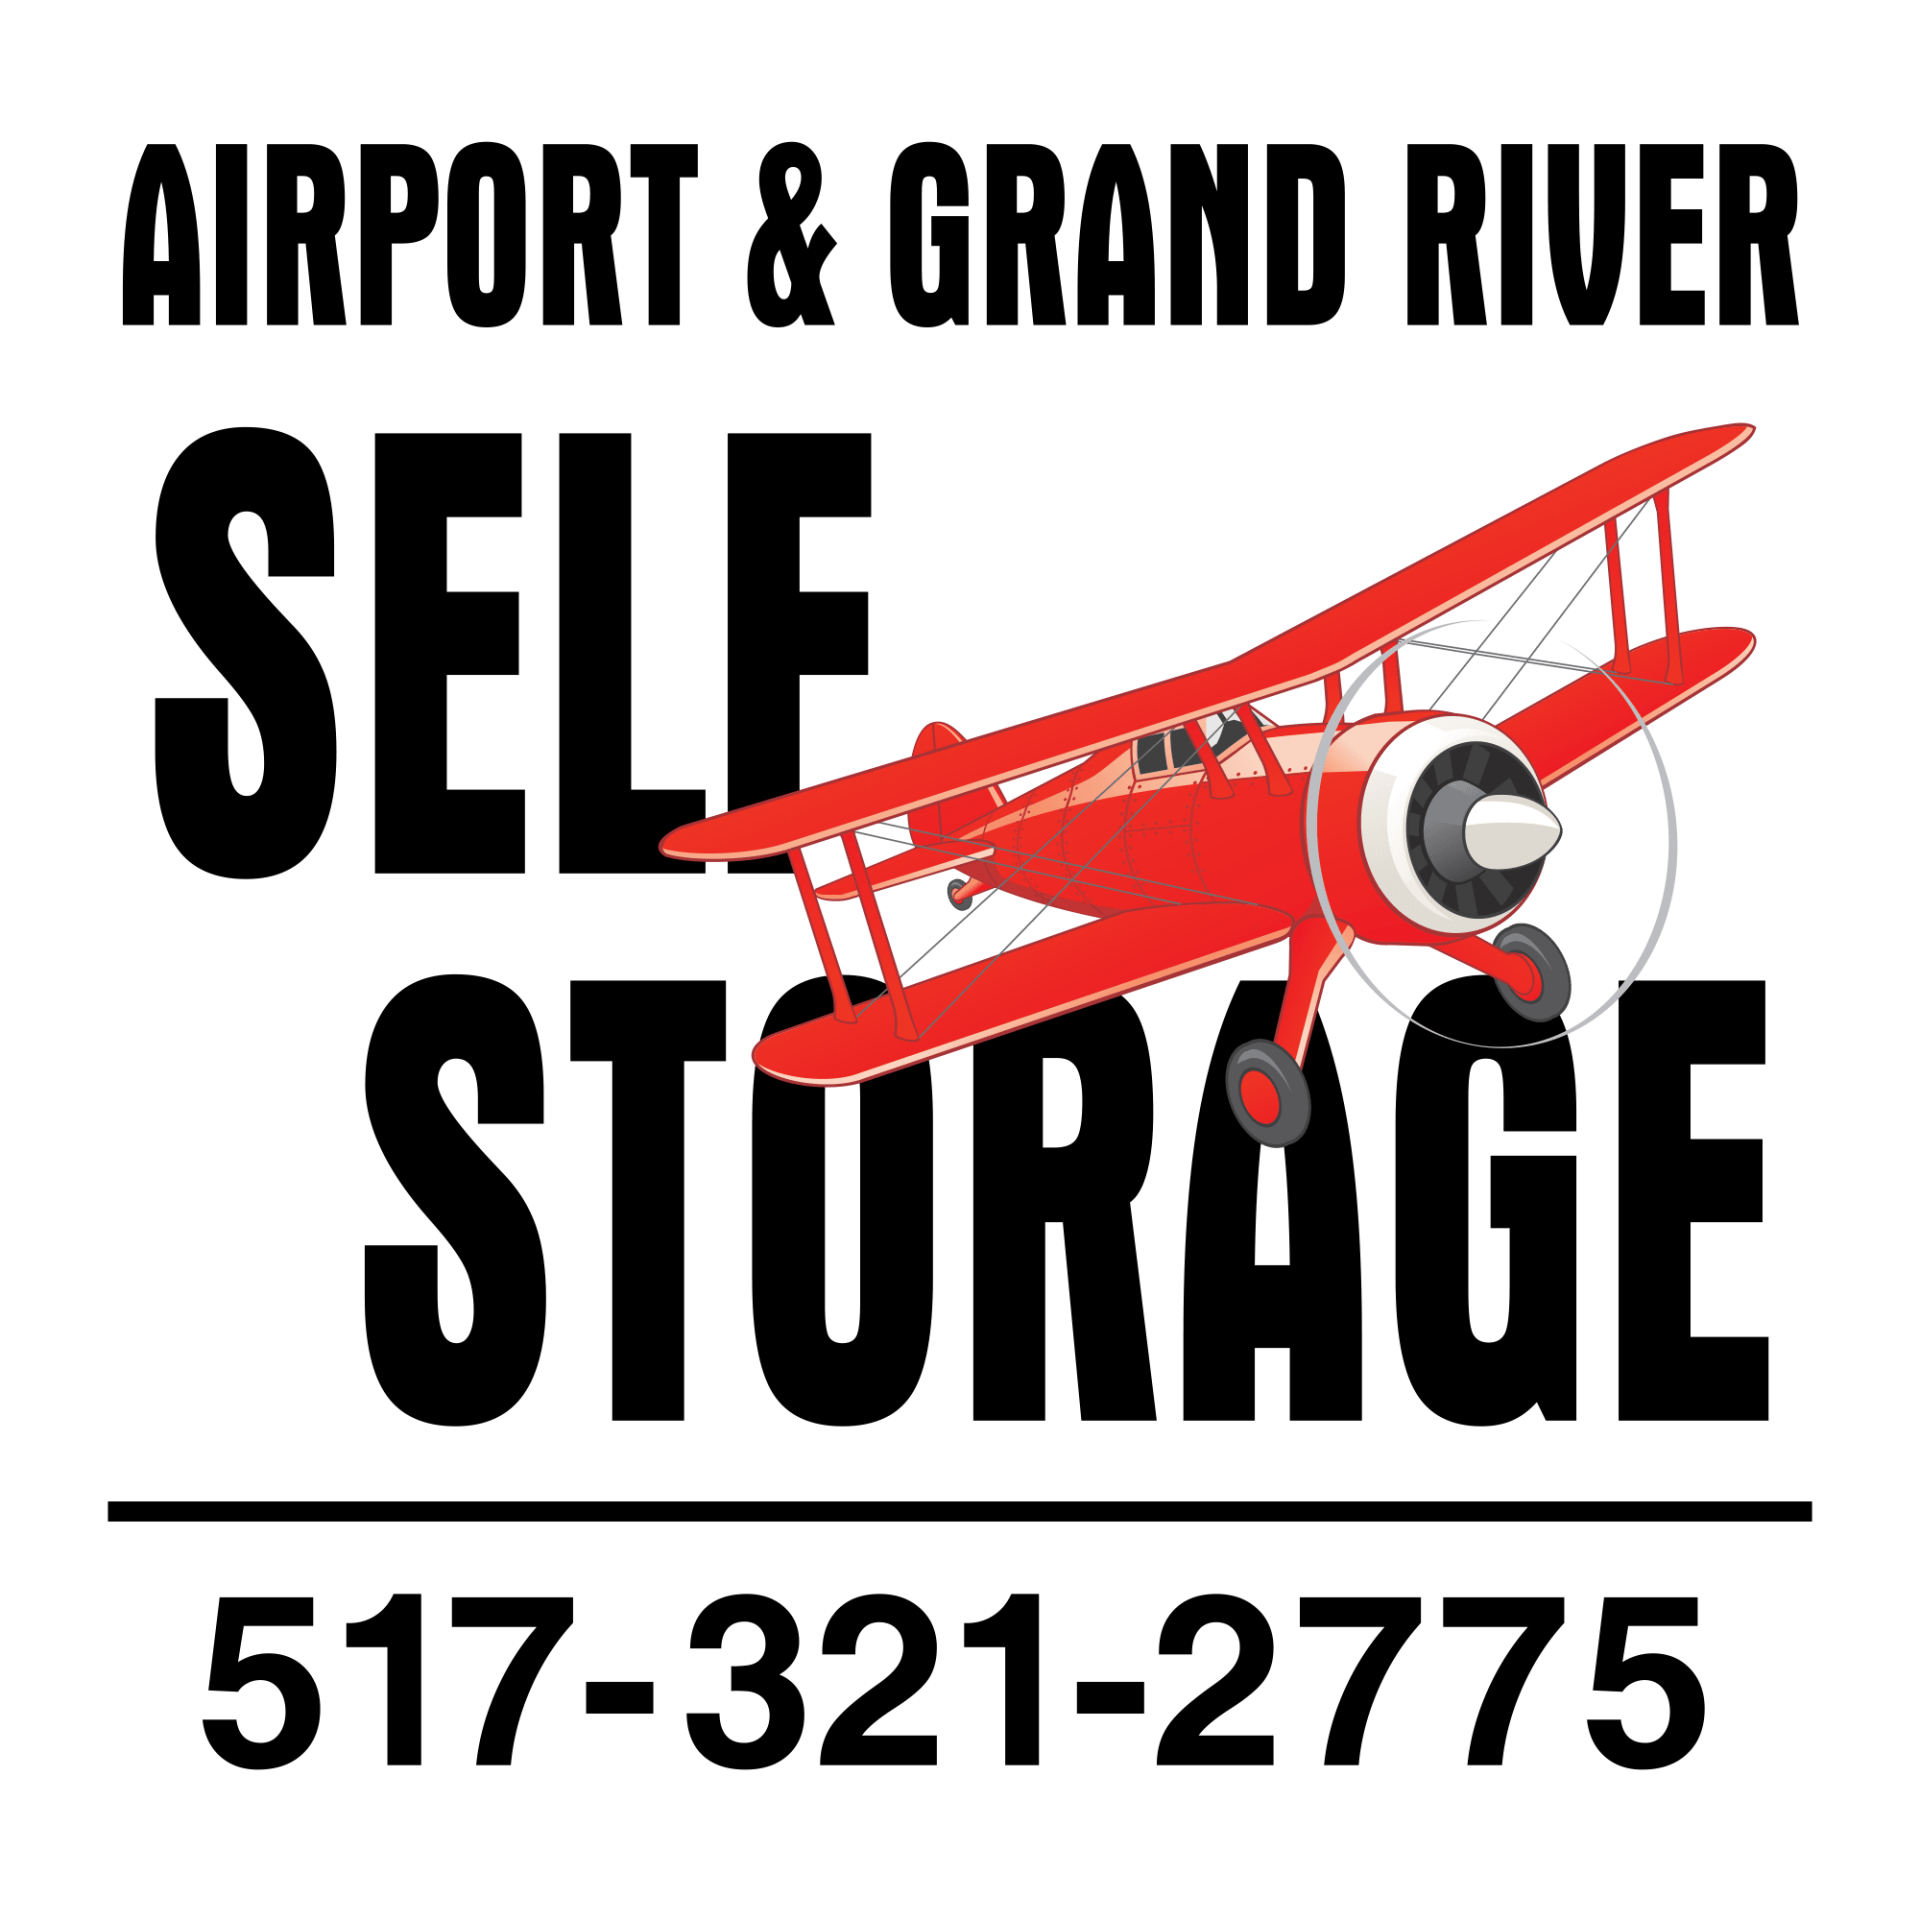 Airport & Grand River Self Storage's